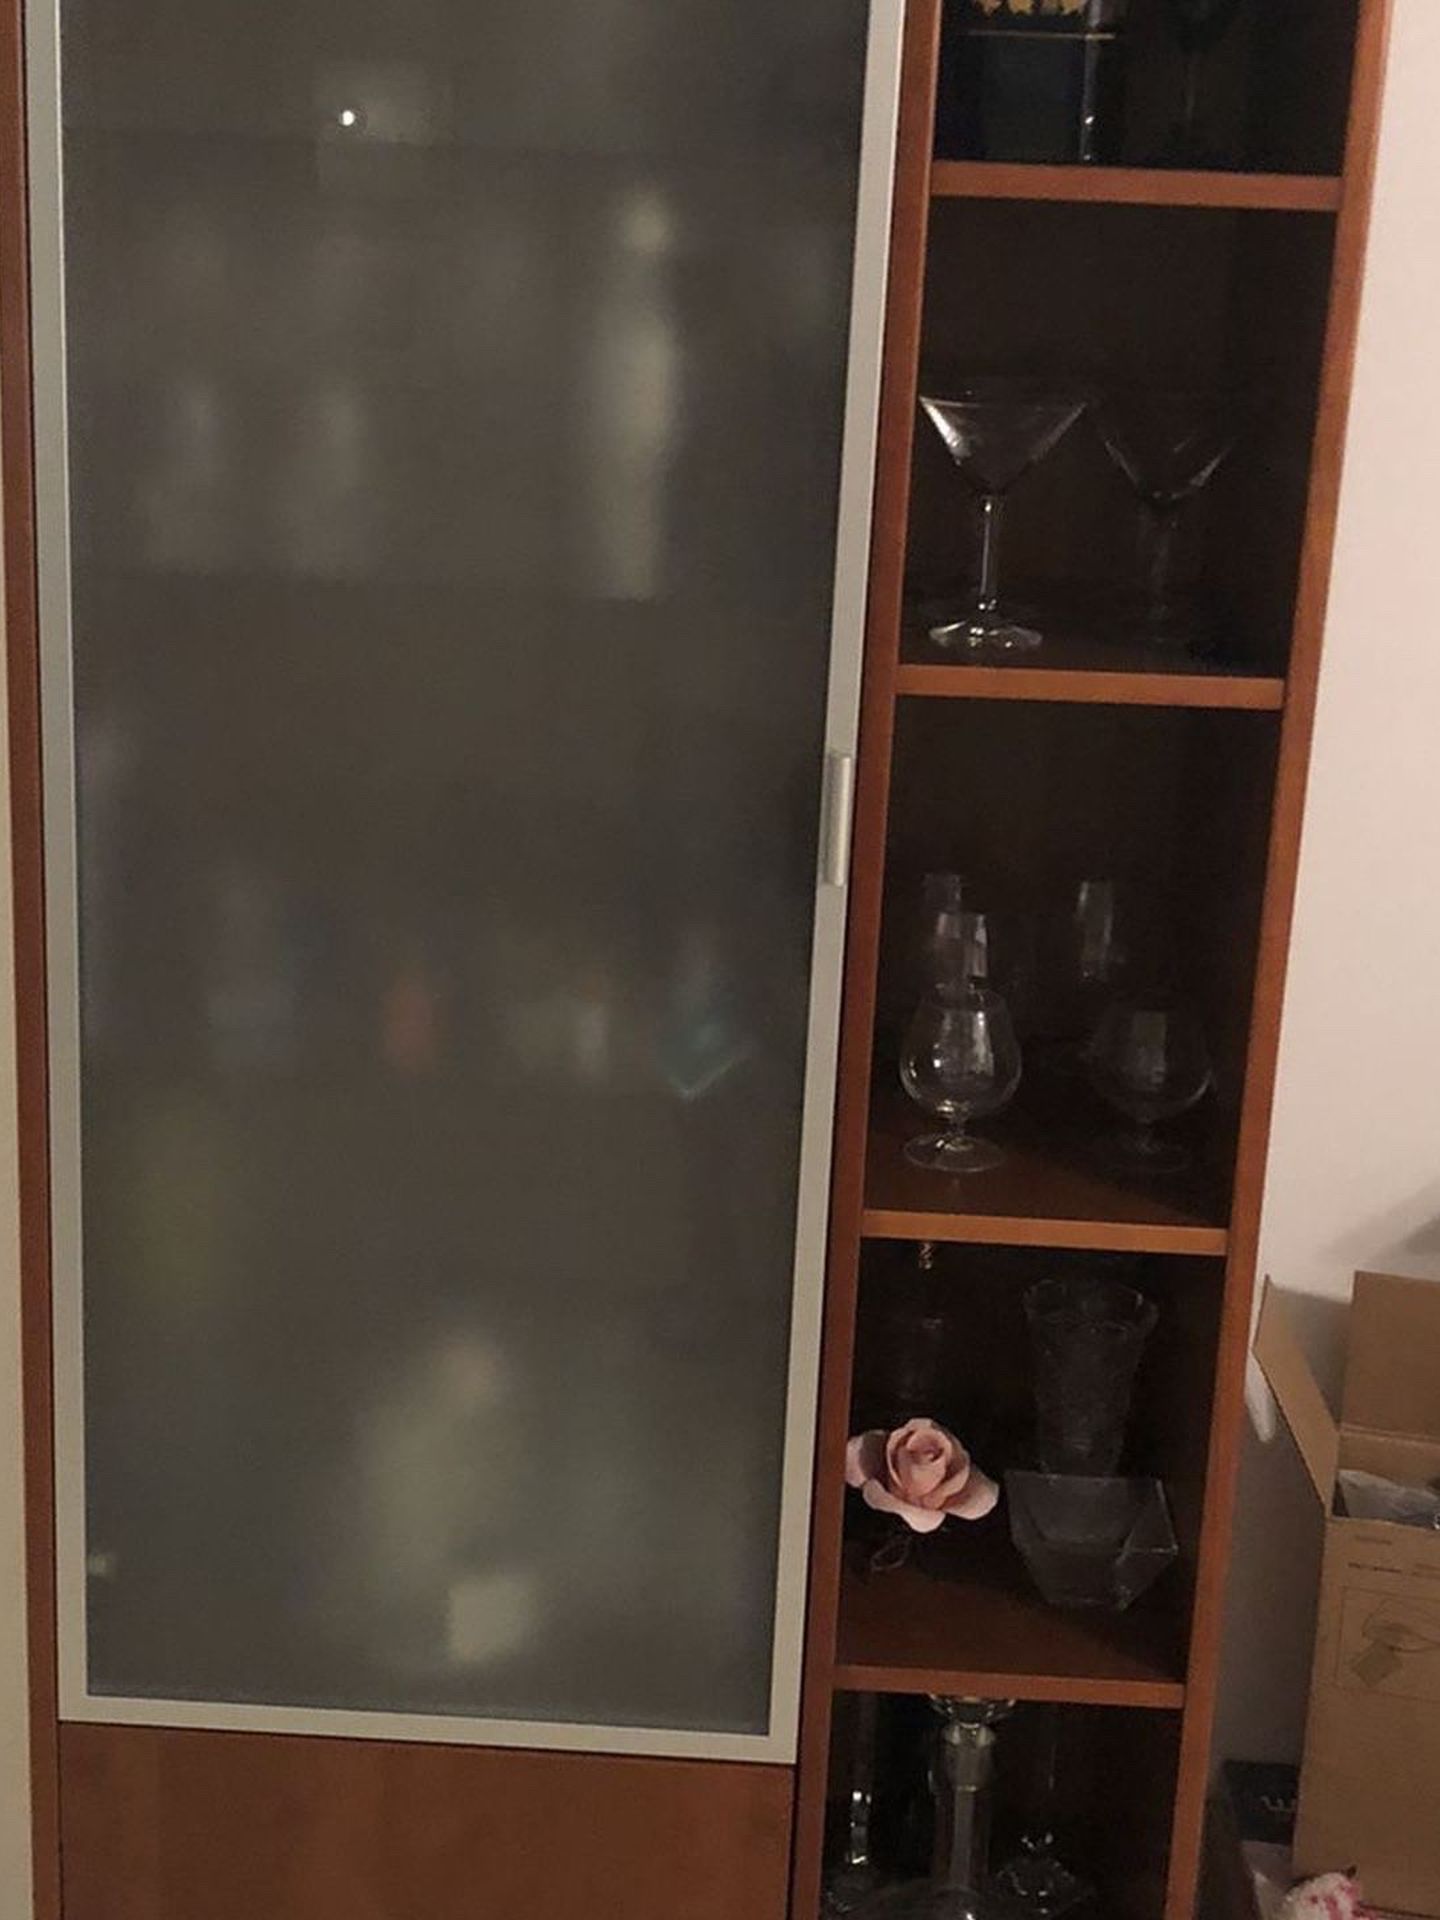 Bookshelf/Liquor Cabinet for FREE